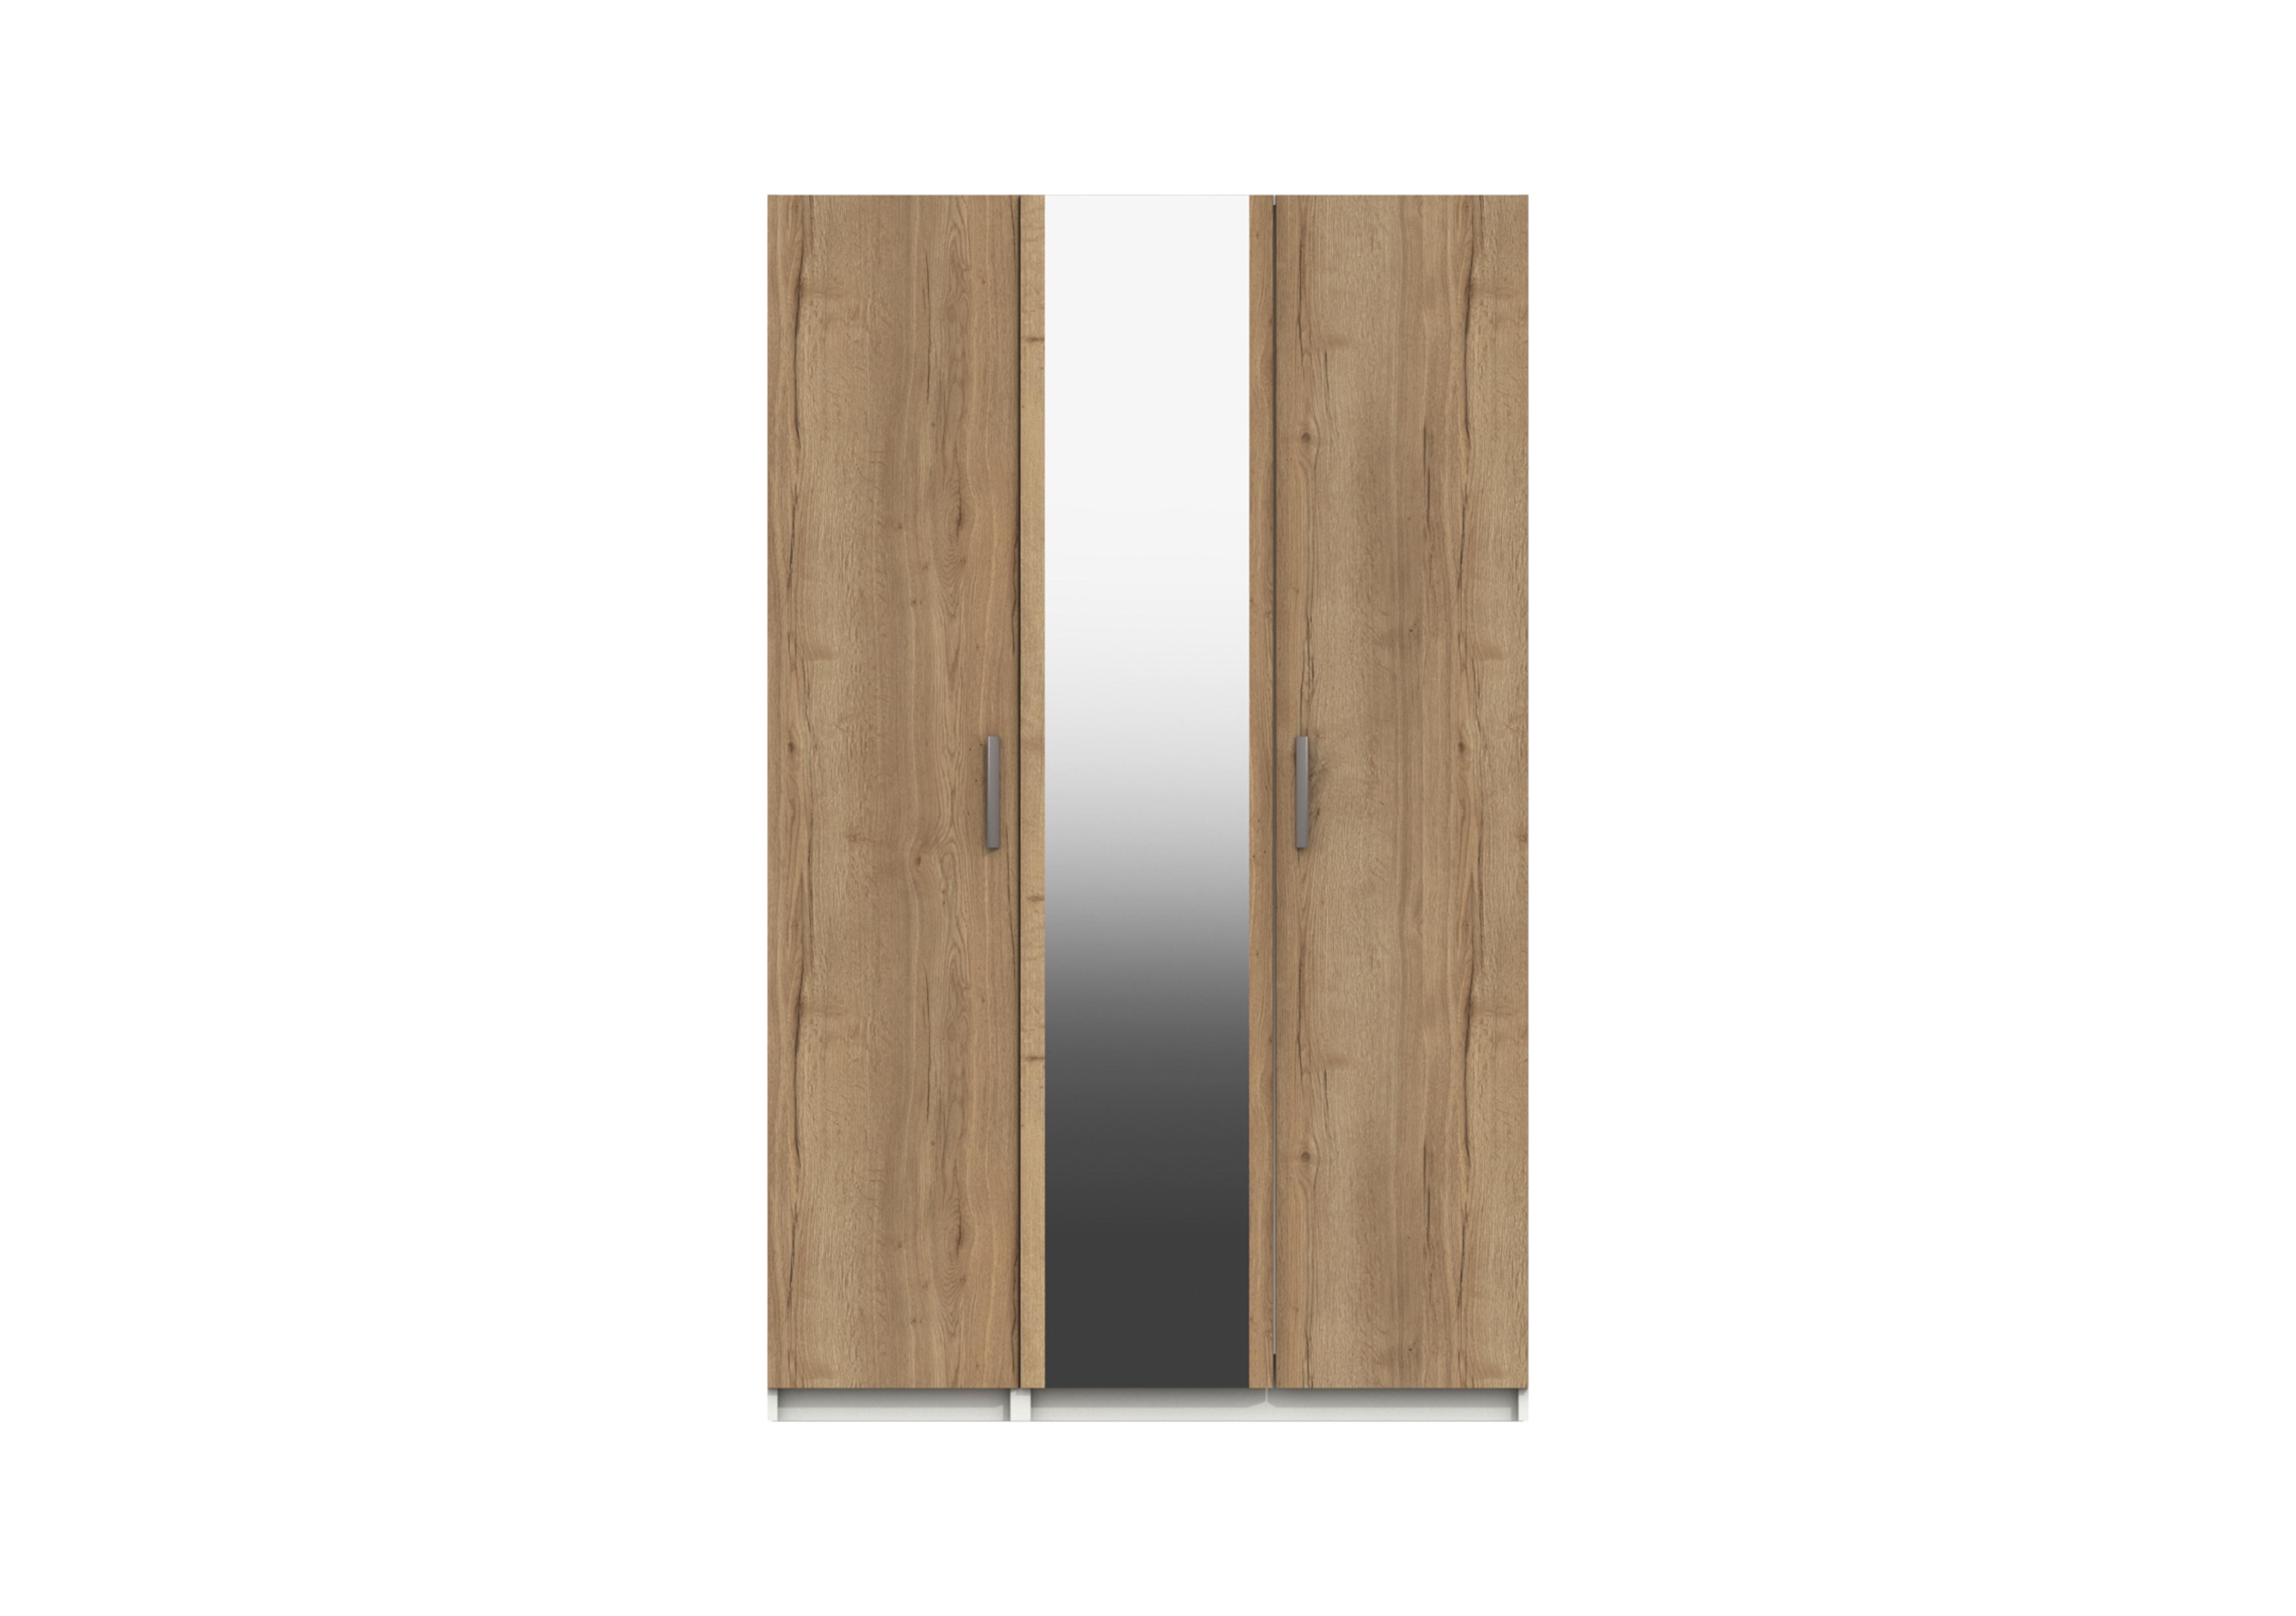 Waterloo 3 Door Wardrobe with Mirror in White & Natural Rustic Oak on Furniture Village